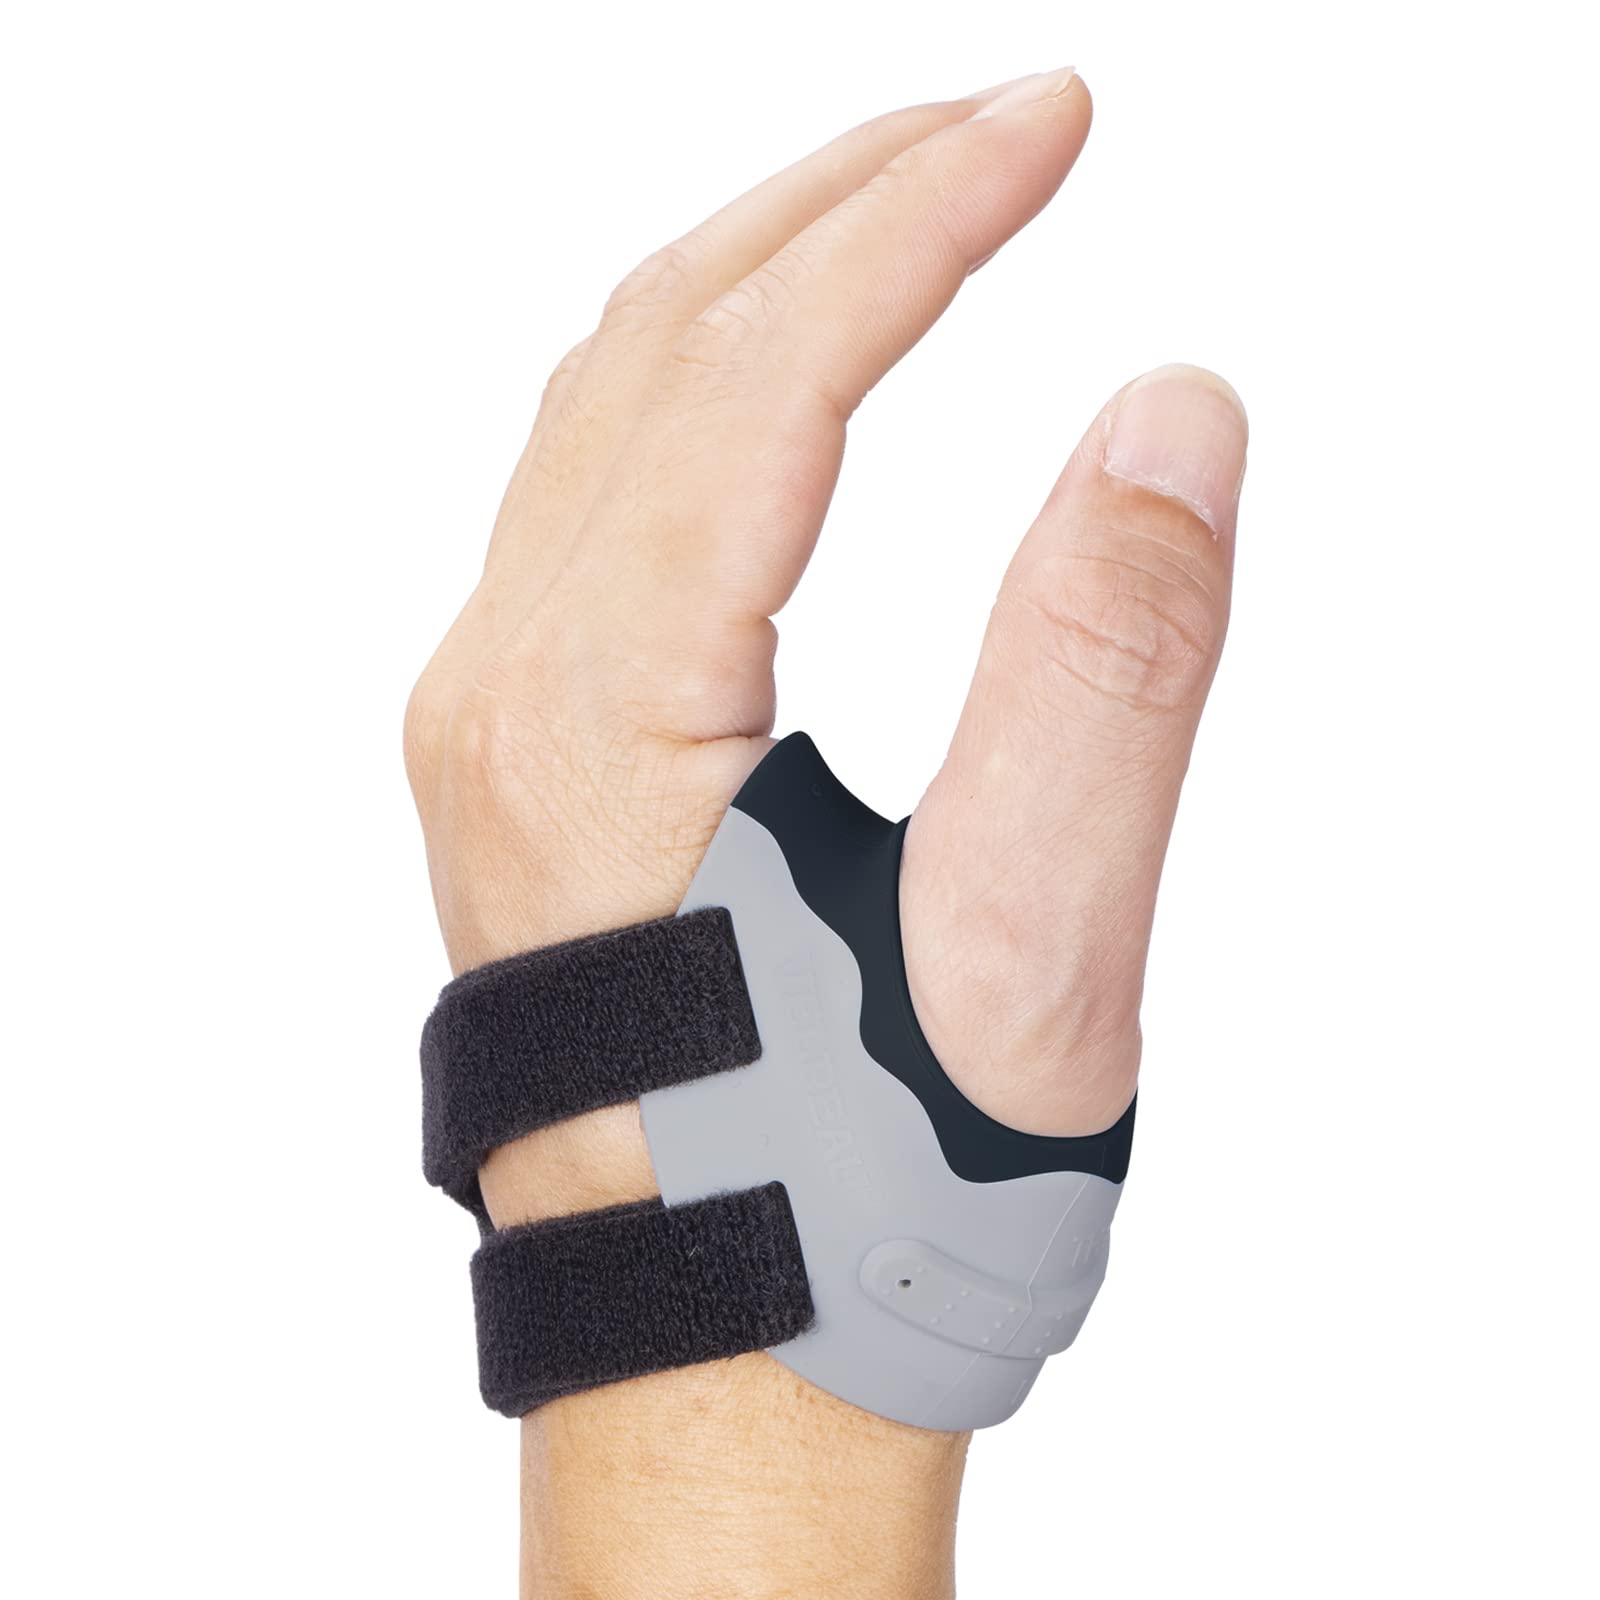 VELPEAU Wrist Brace with Thumb Spica Splint Support Left Hand Size